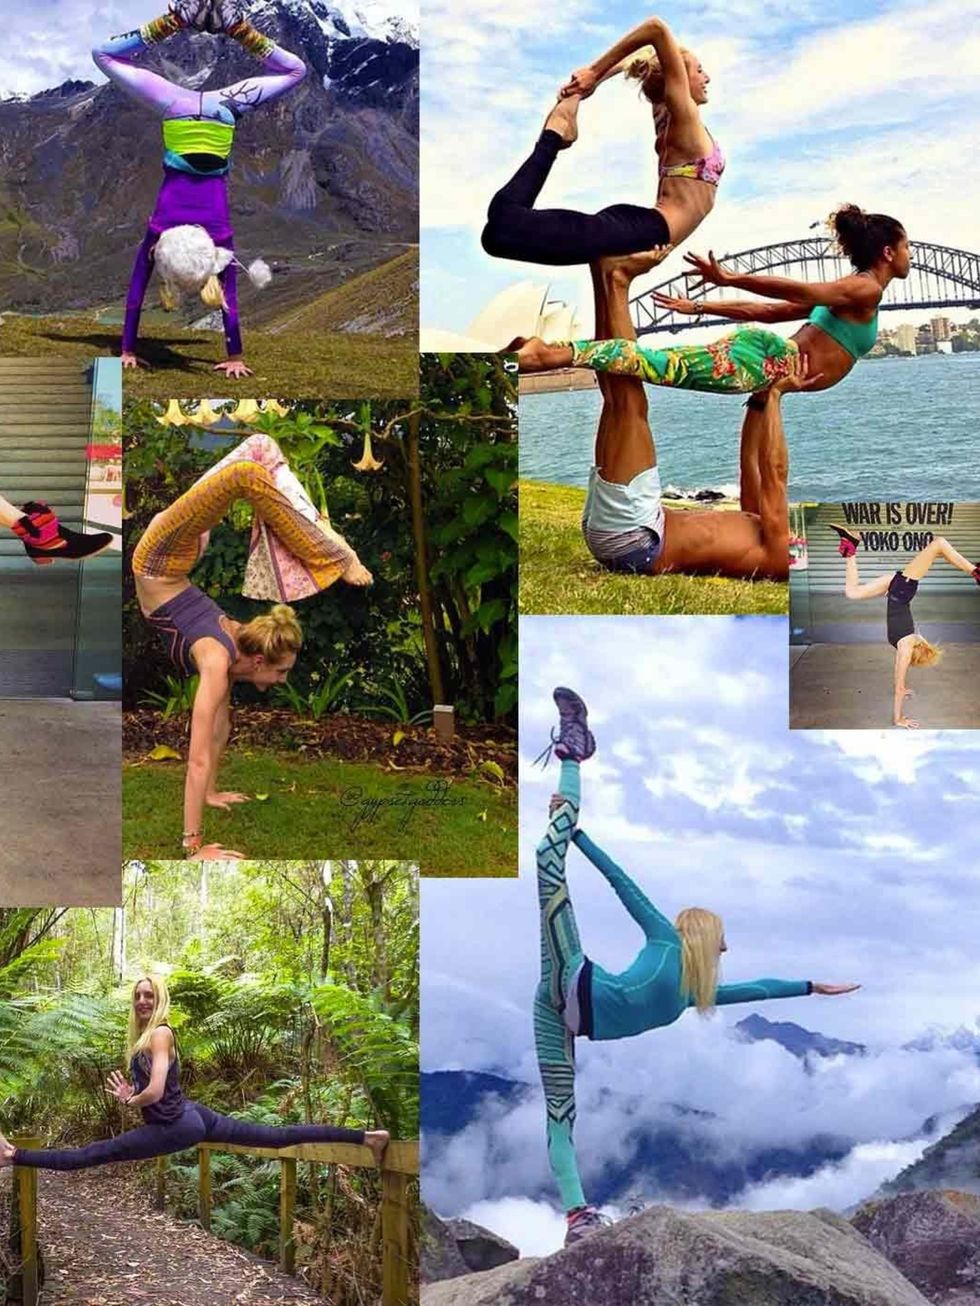 <p><a href="http://instagram.com/gypsetgoddess">@GypsetGoddess</a></p><p>Gypset AKA jet-setting gypsy, Caitlin can bend her body into shapes you have to see to believe. Youll find pictures of her striking yoga poses in front of stunning backdrops, plus